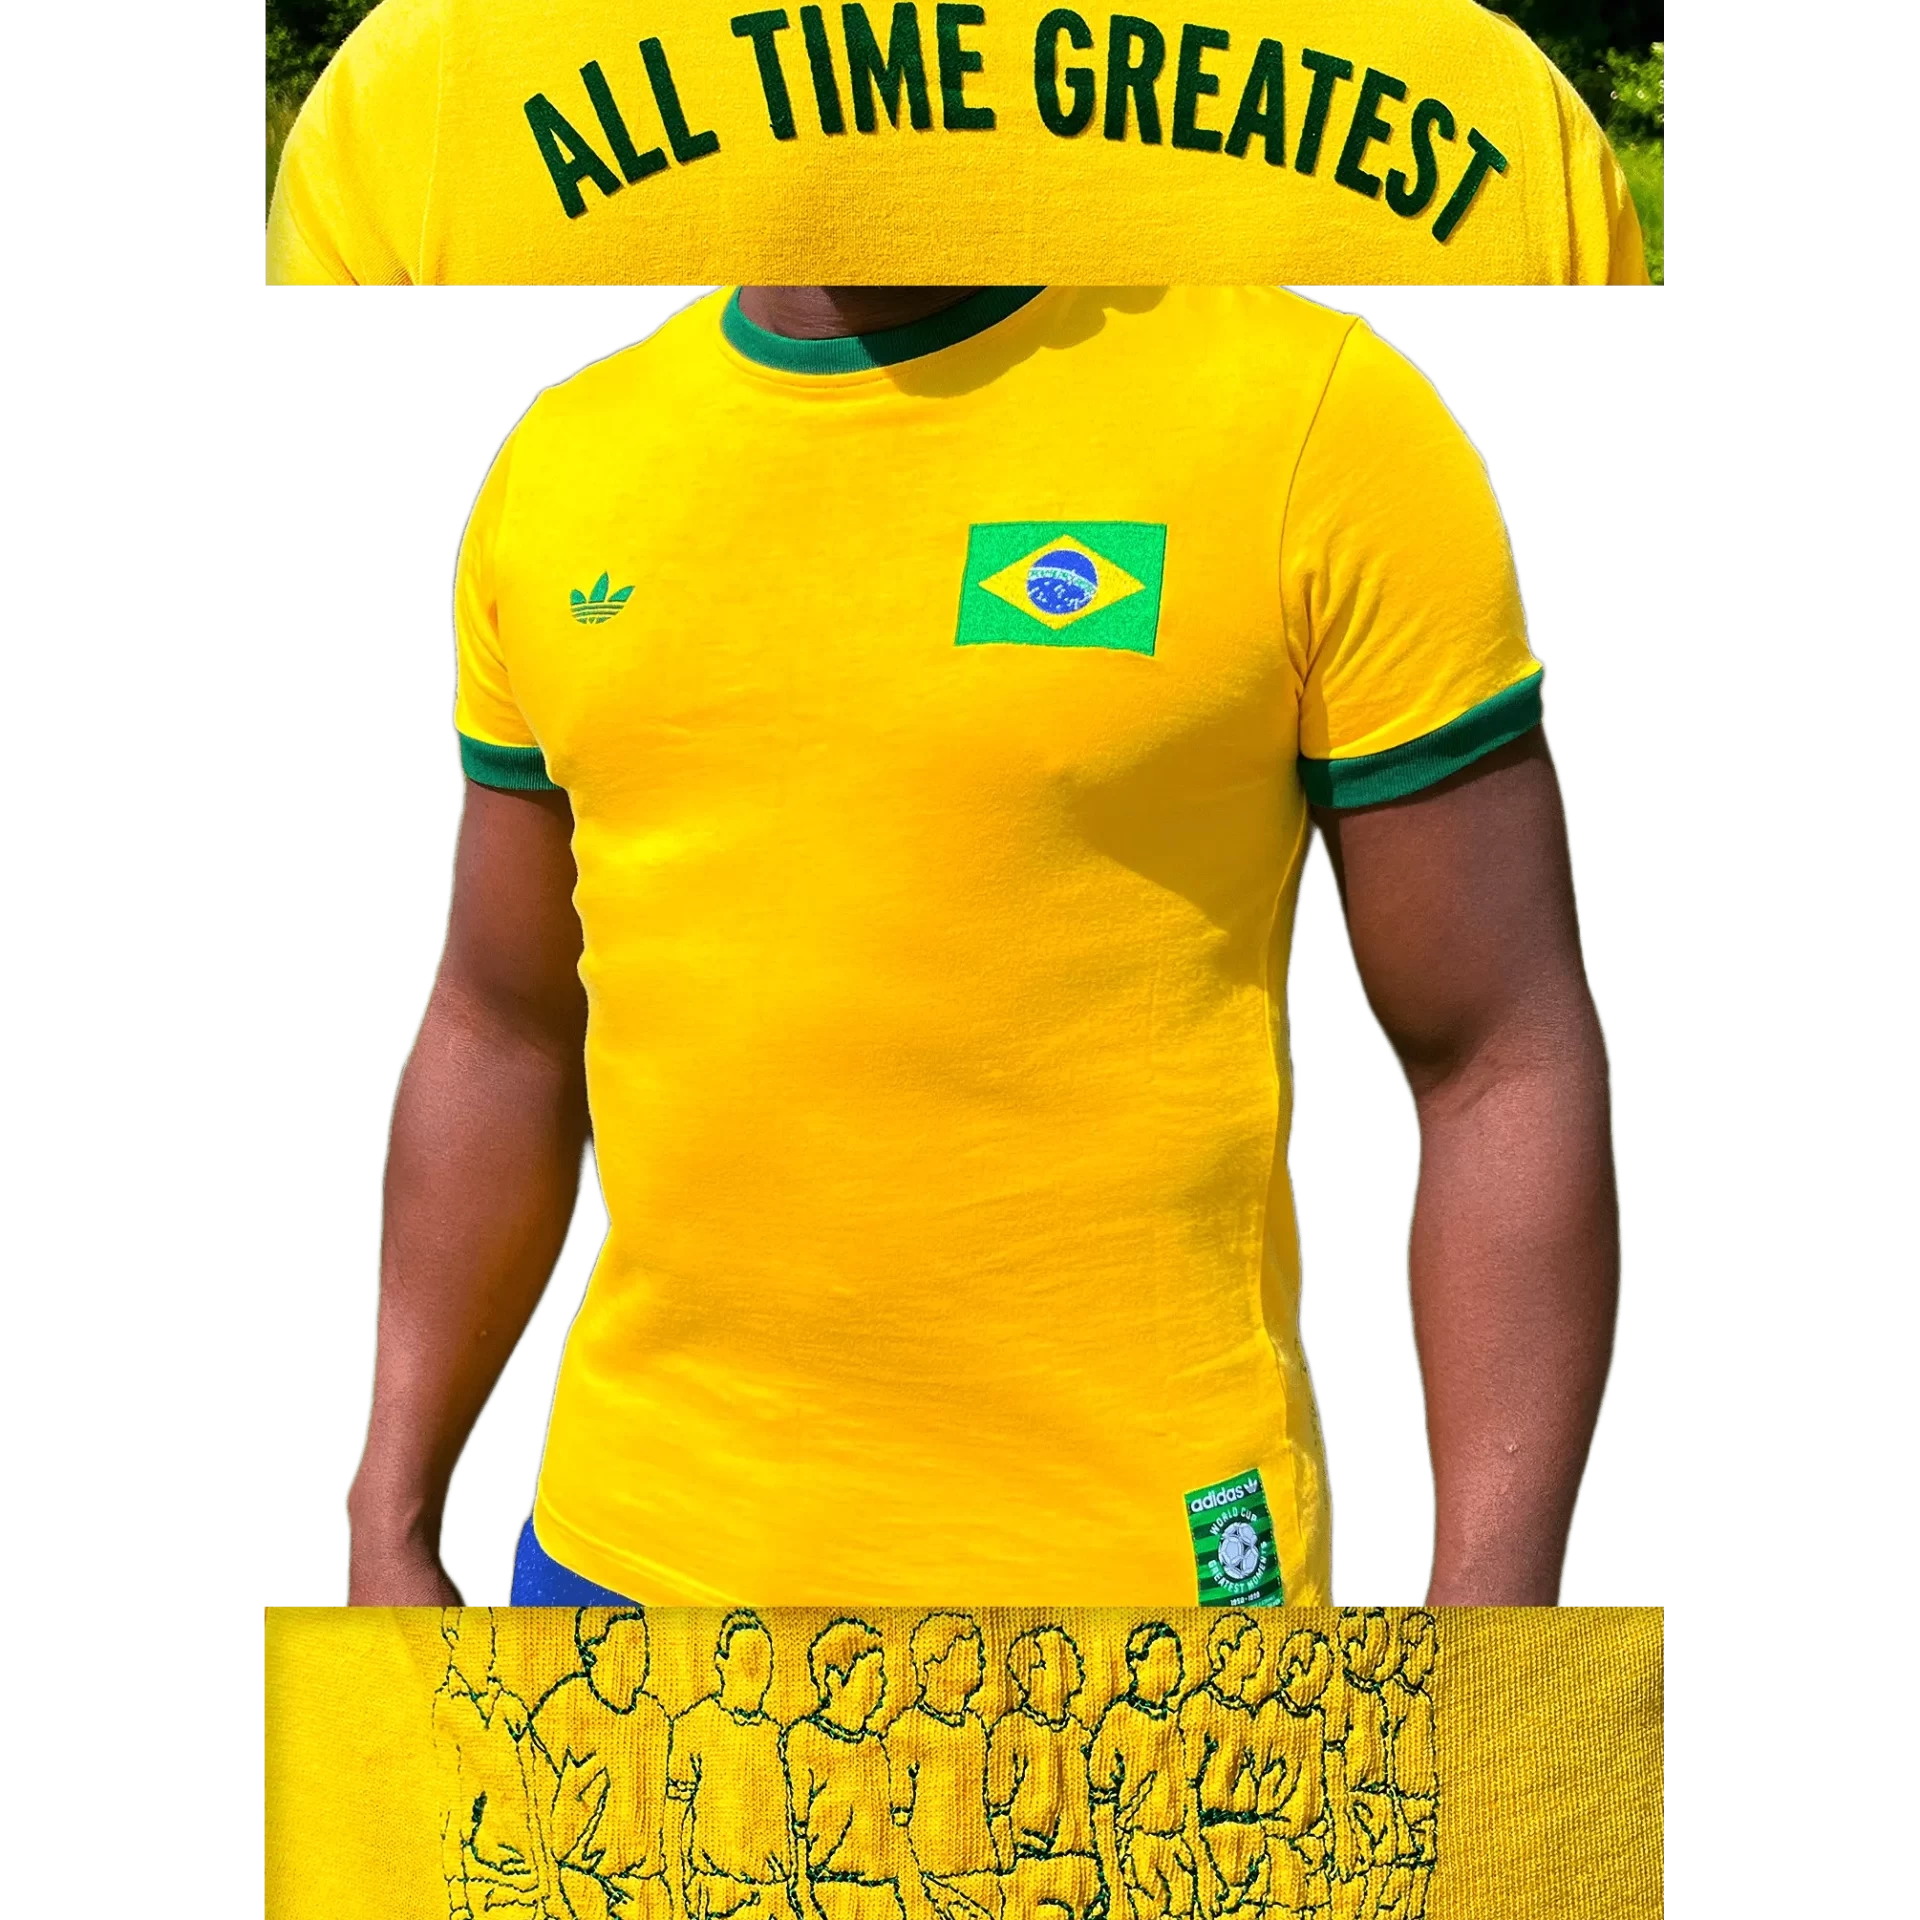 Men's 2006 Brasil '70 T-Shirt by Adidas Originals: Memorable (EnLawded.com file #lmchk67045ip2y123822kg9st)